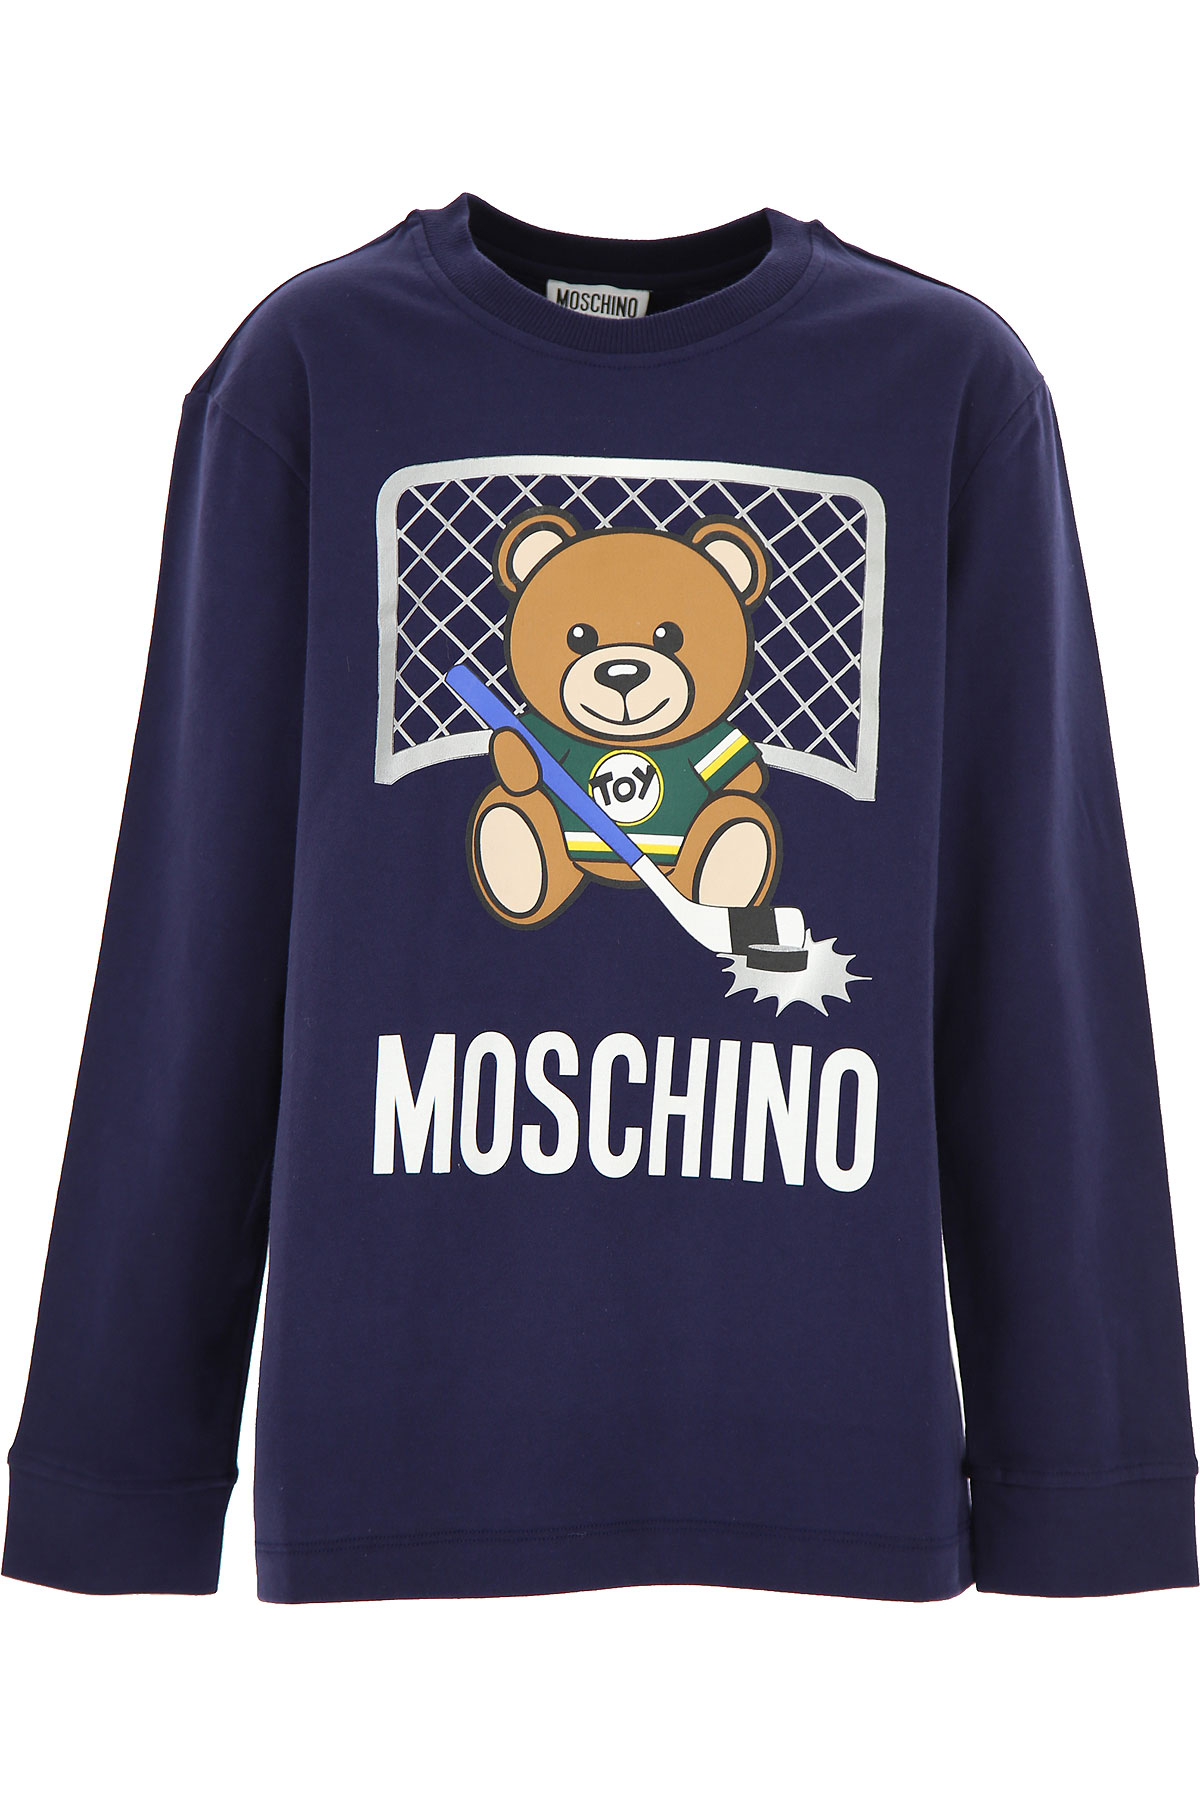 Moschino Kinder T-Shirt für Jungen Günstig im Sale, Blau, Baumwolle, 2017, 10Y 12Y 14Y 4Y 8Y